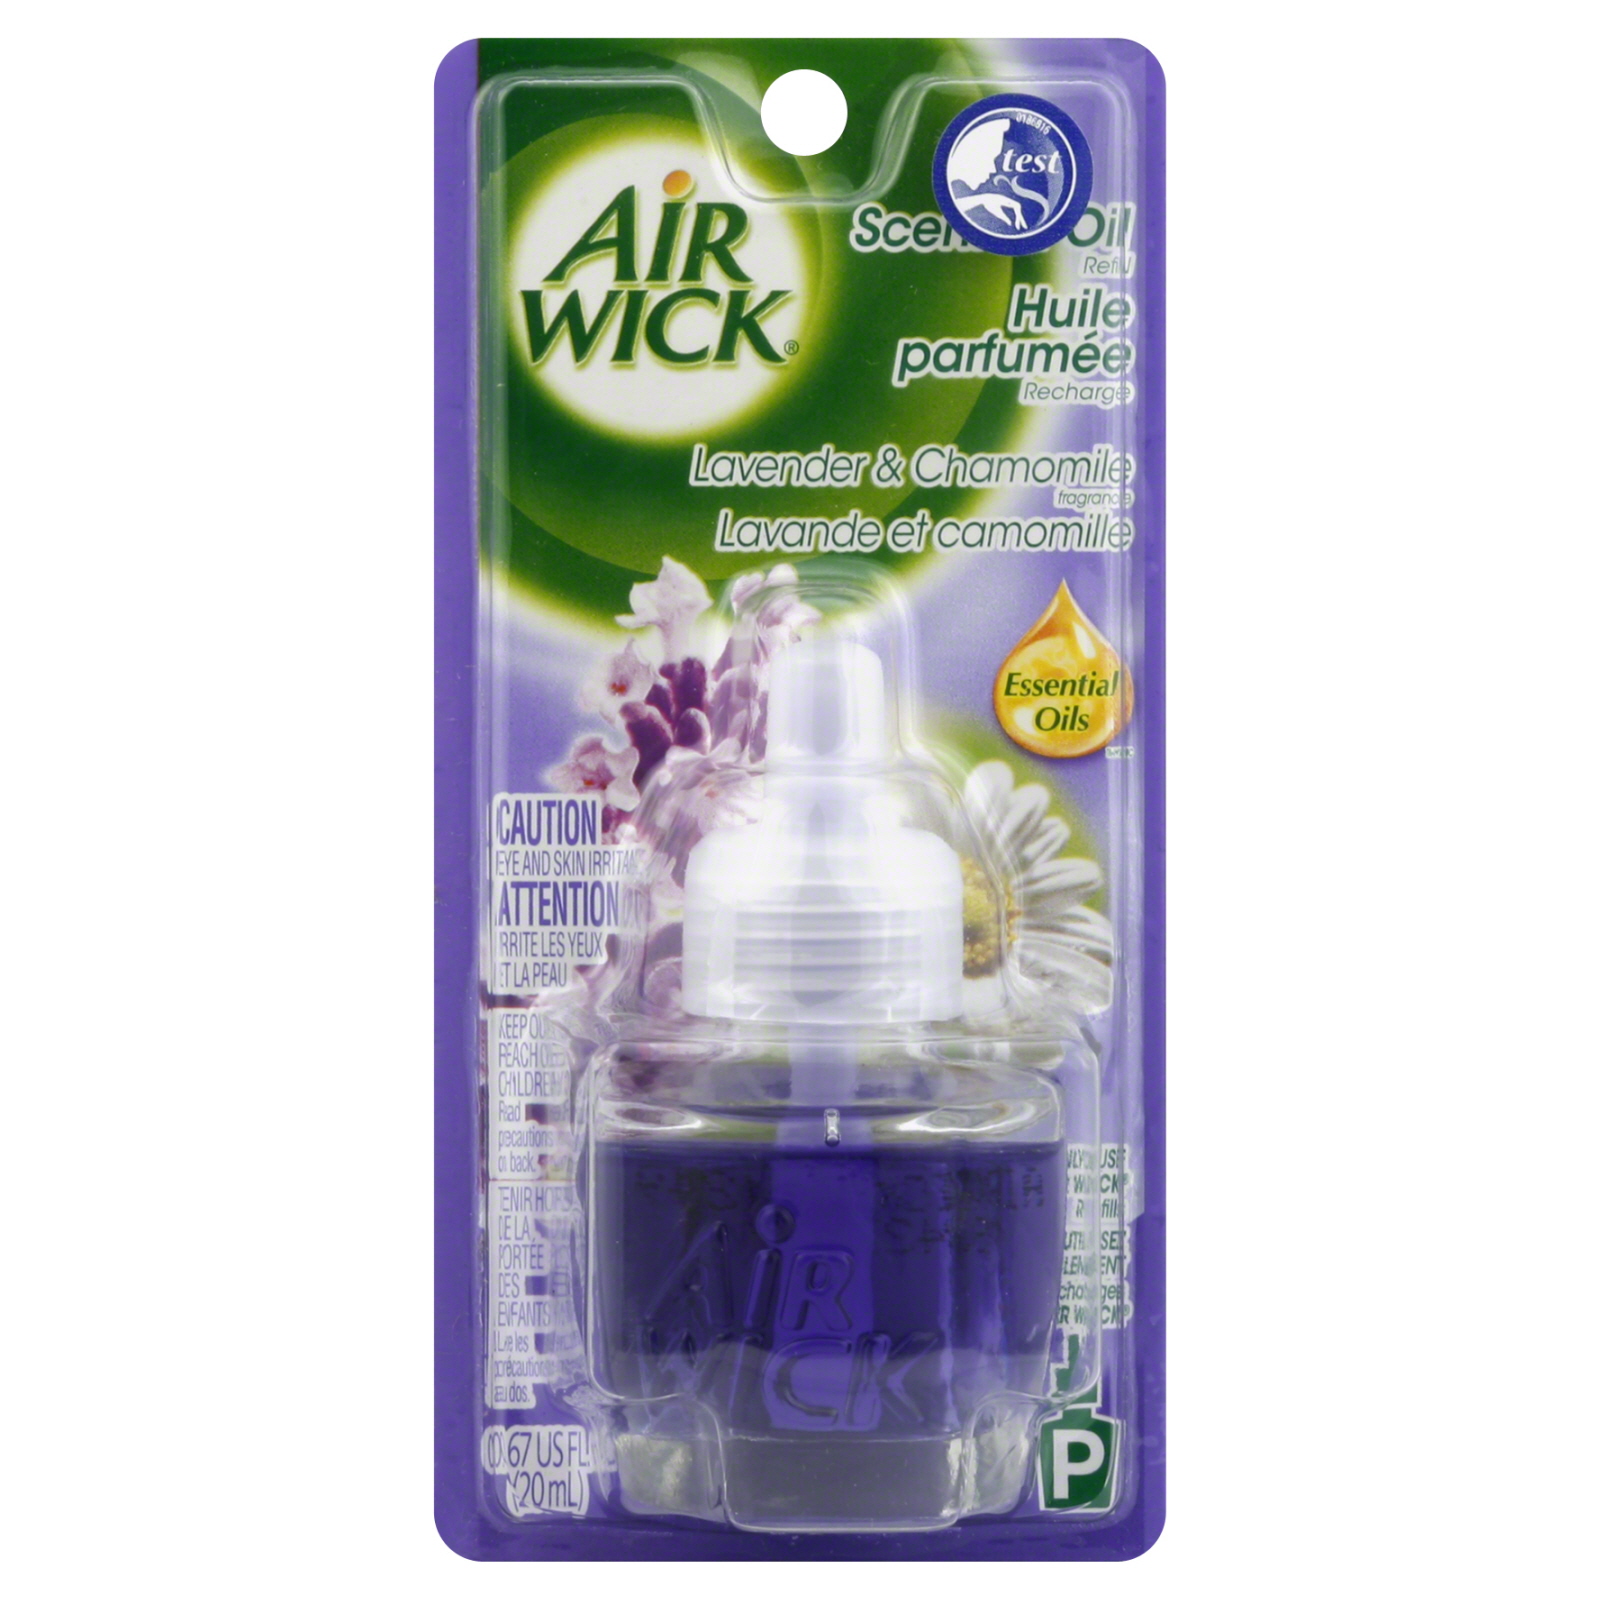 Airwick Scented Oil Refill, Relaxation, Lavender & Chamomile, 0.71 fl oz (21 ml)